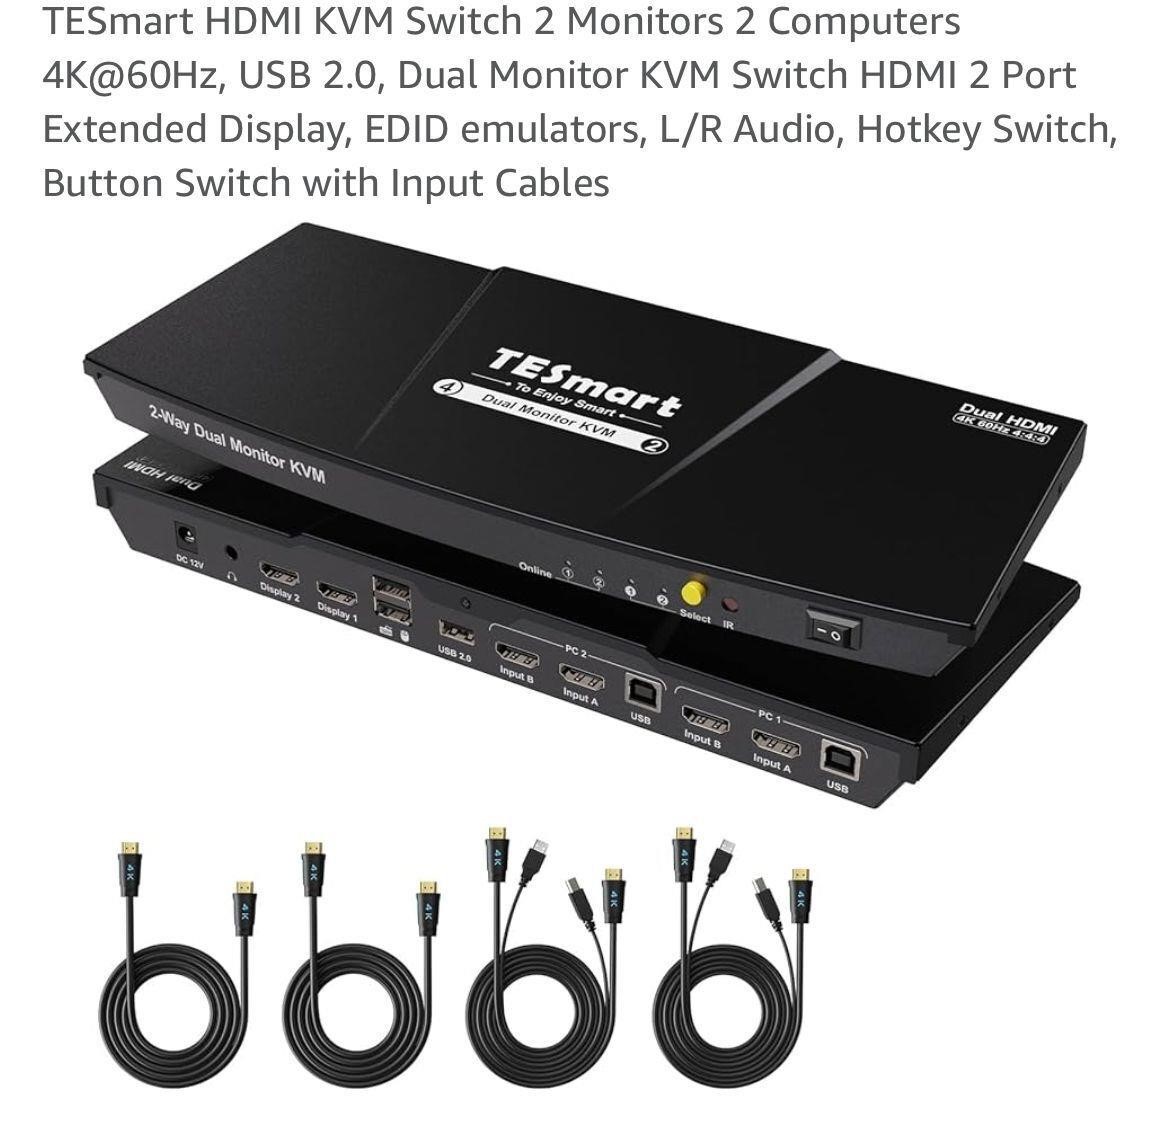 TESmart HDMI KVM Switch 2 Monitors